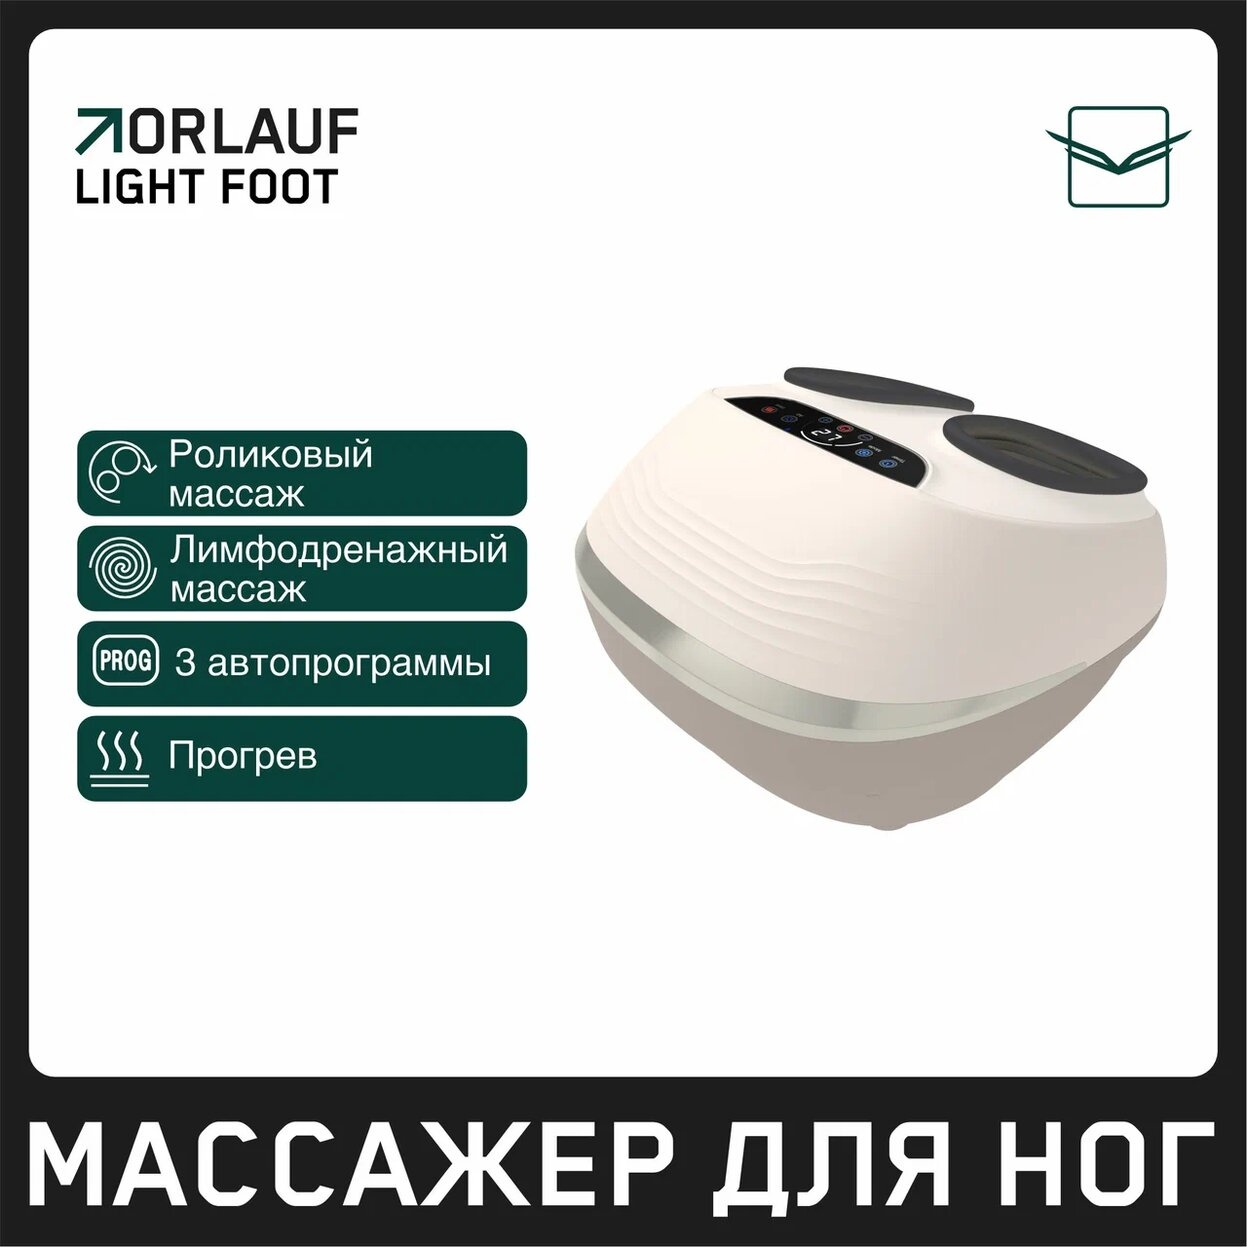 Orlauf Light Foot из каталога массажеров в Екатеринбурге по цене 18900 ₽